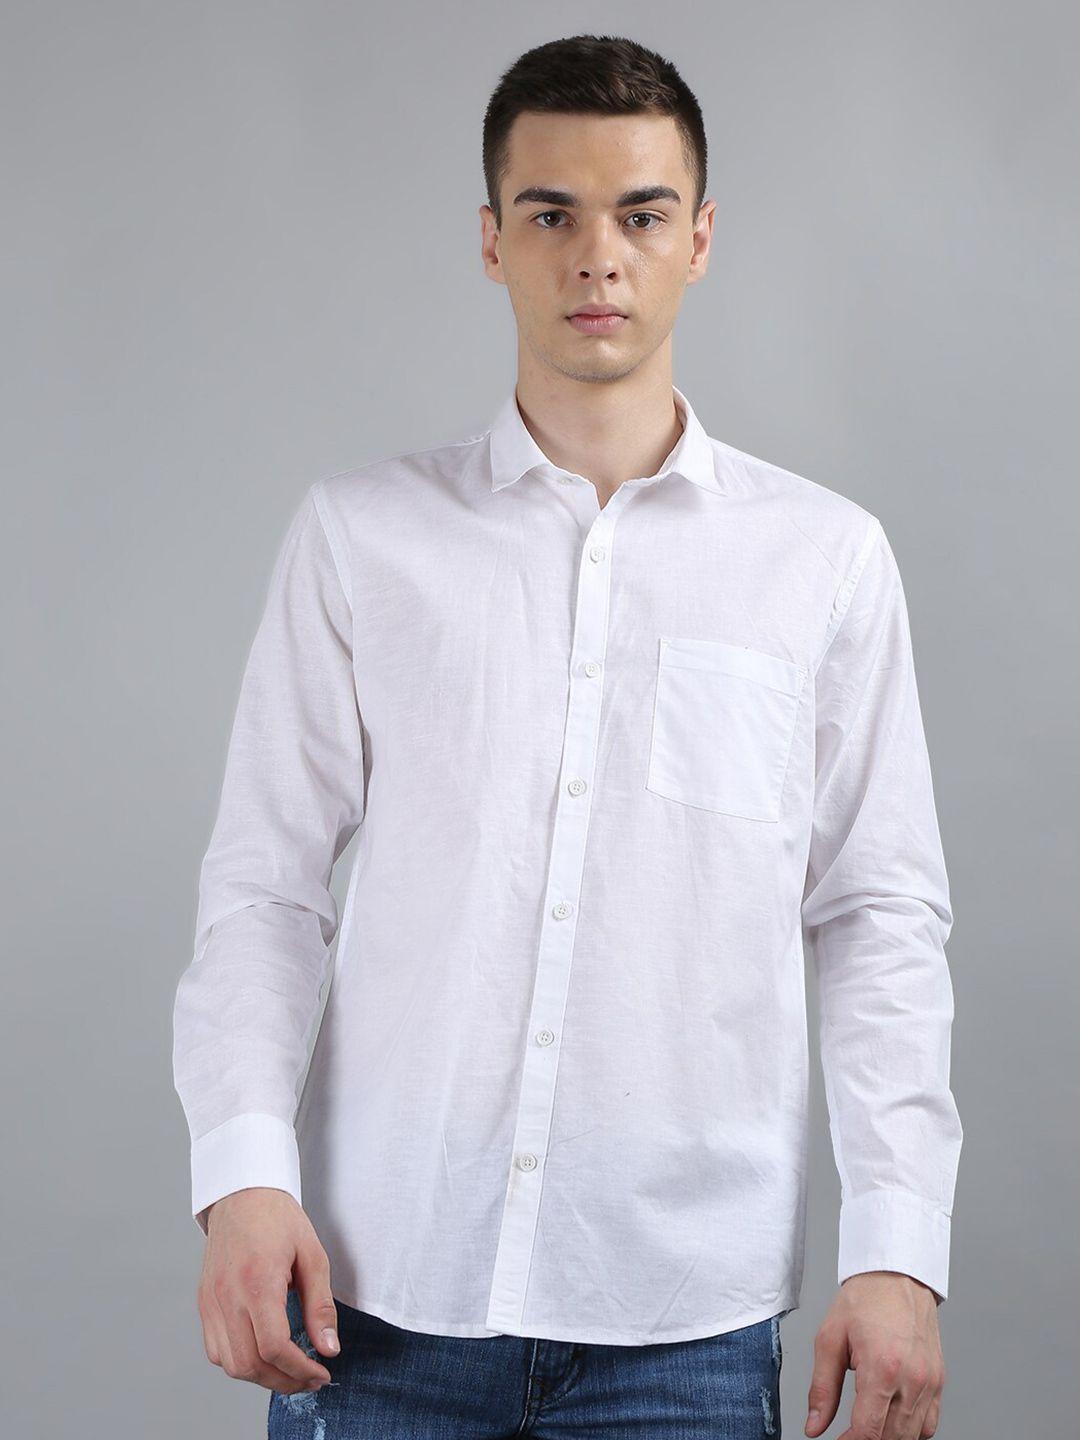 tim paris standard spread collar pure cotton casual shirt